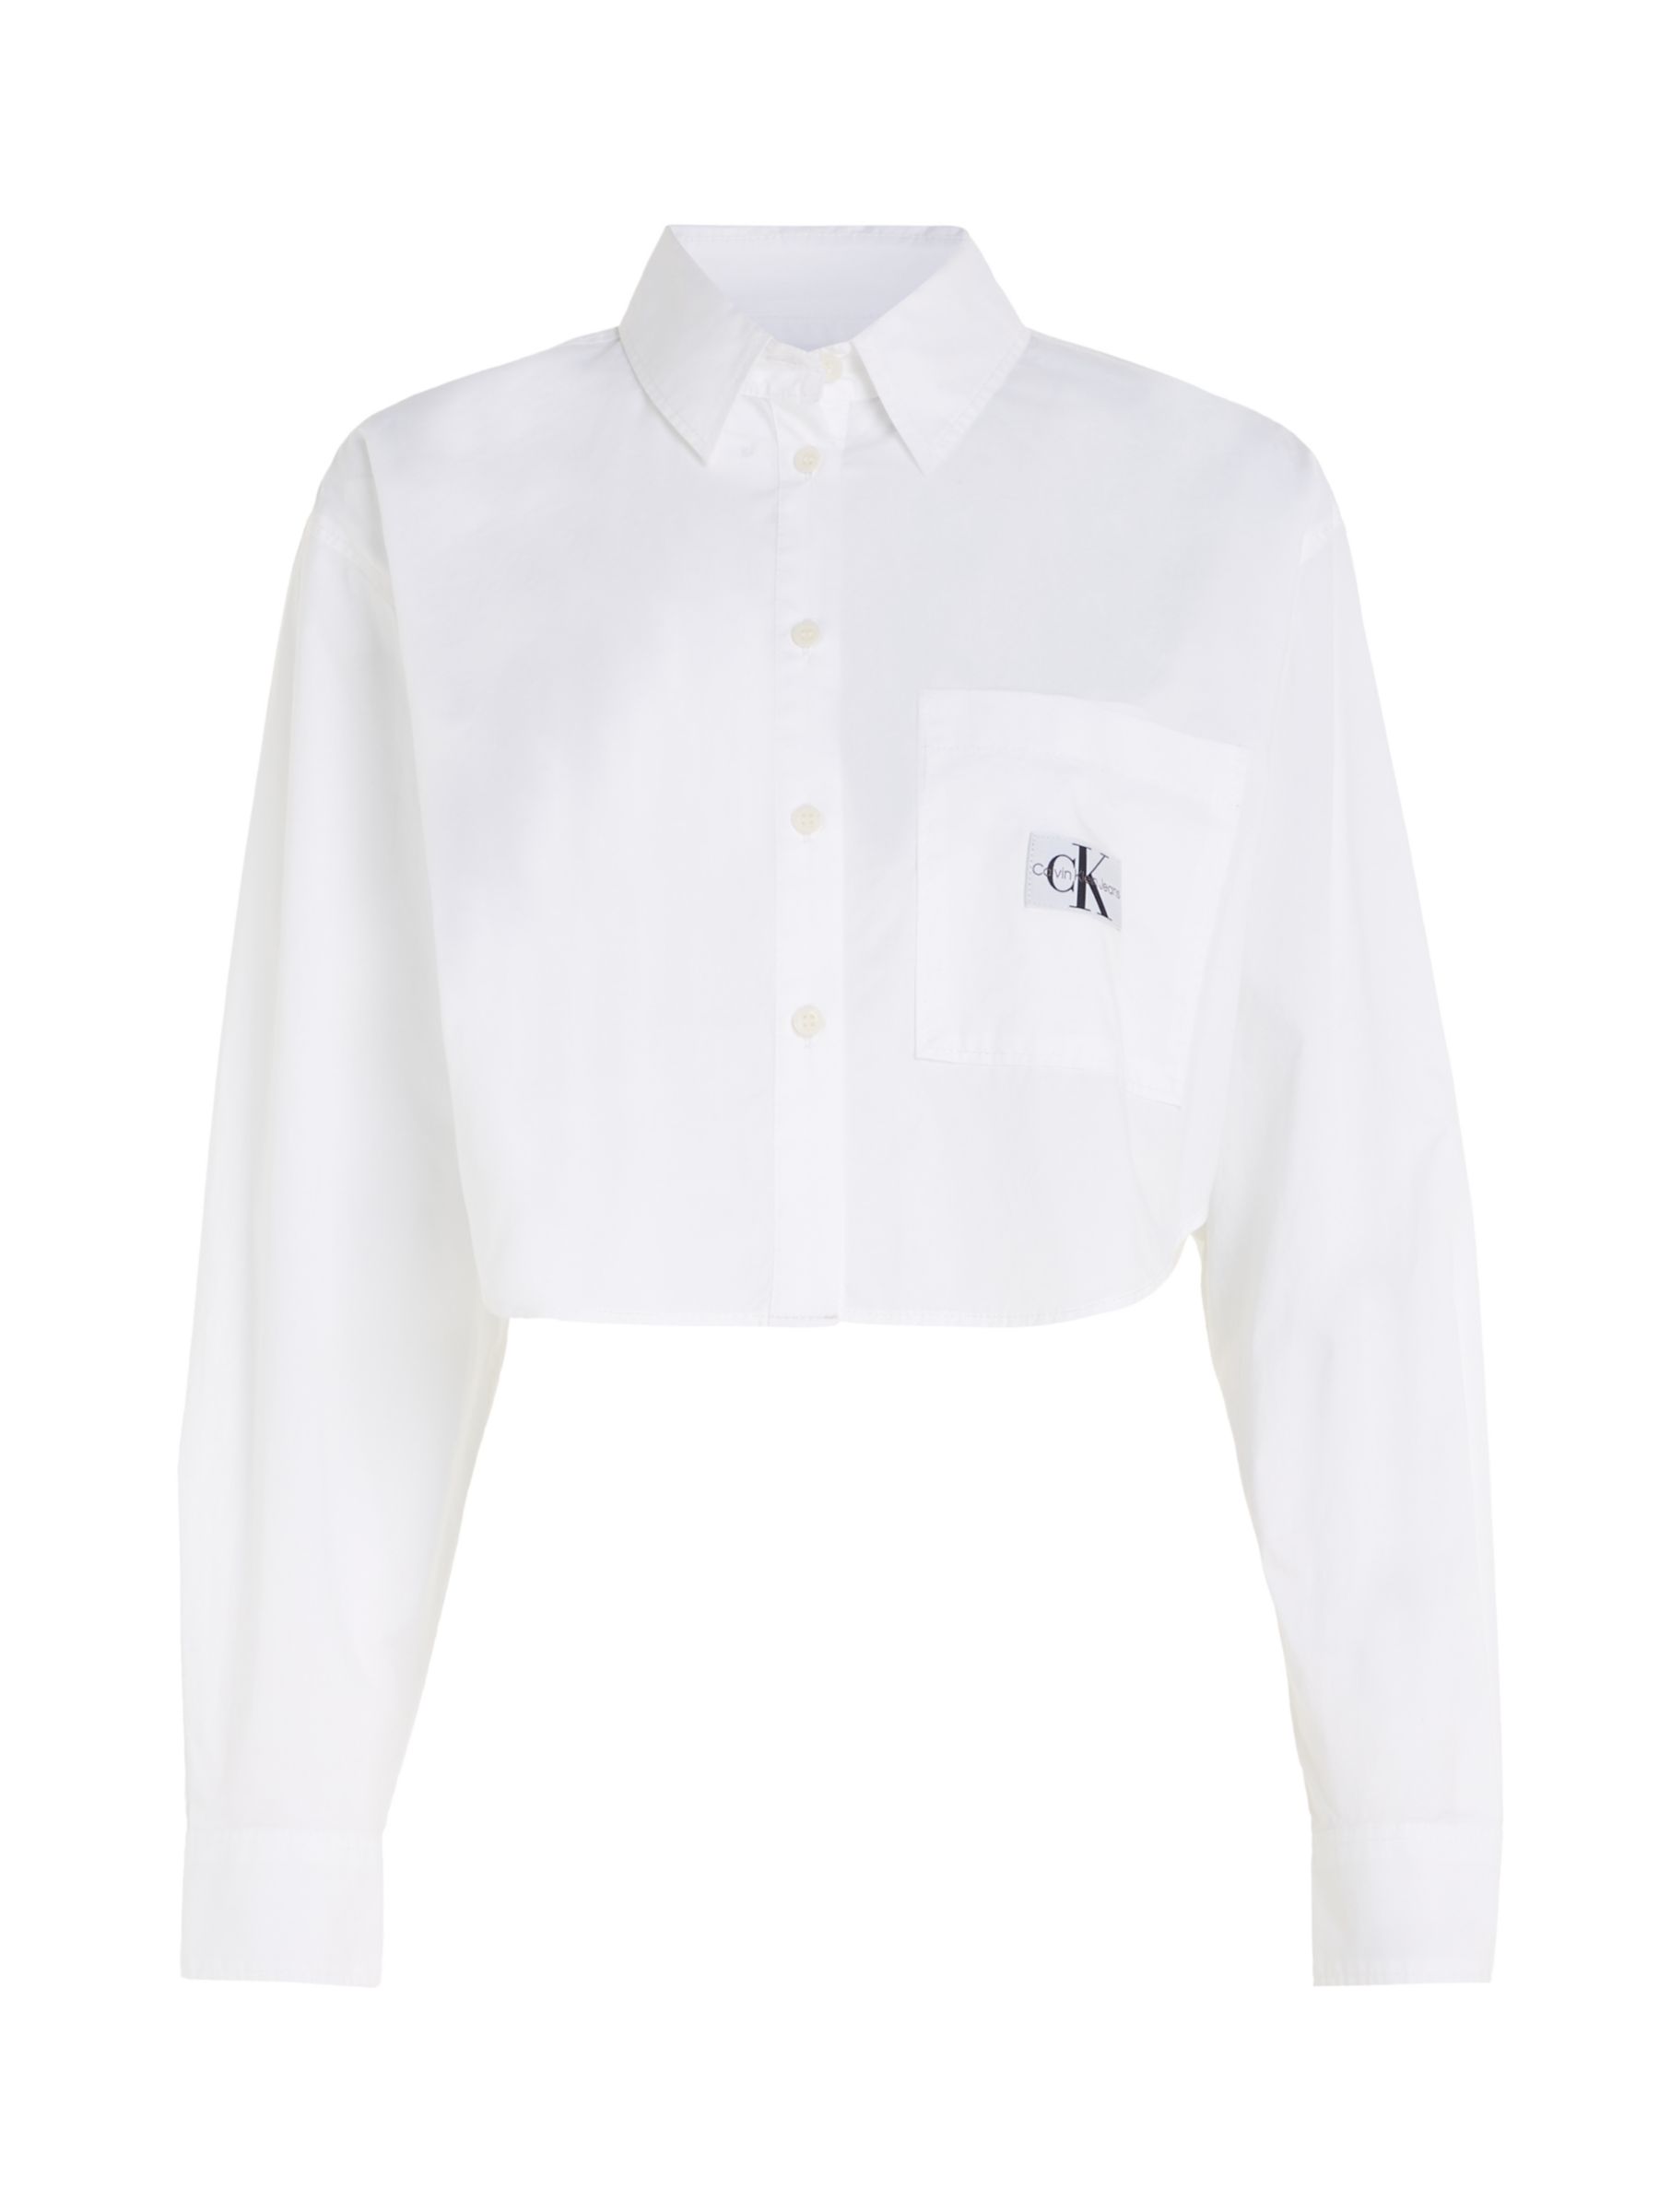 Calvin Klein Woven Label Crop Shirt, Bright White at John Lewis & Partners